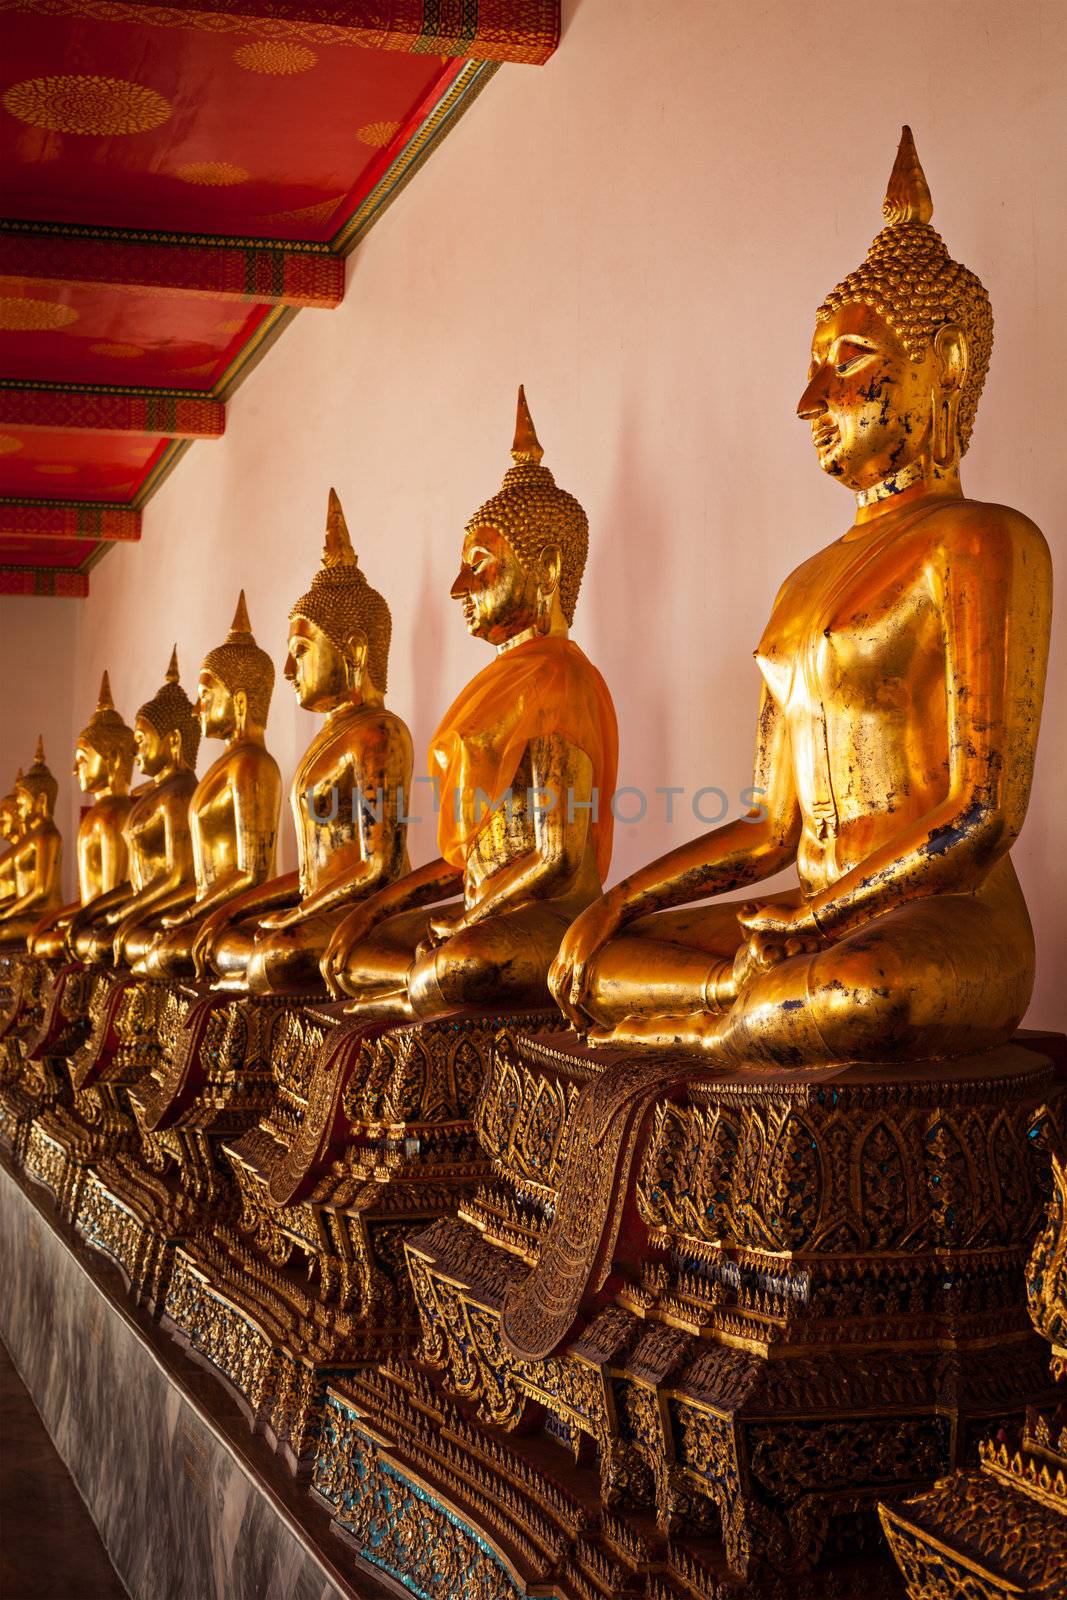 Sitting Buddha statues, Thailand by dimol